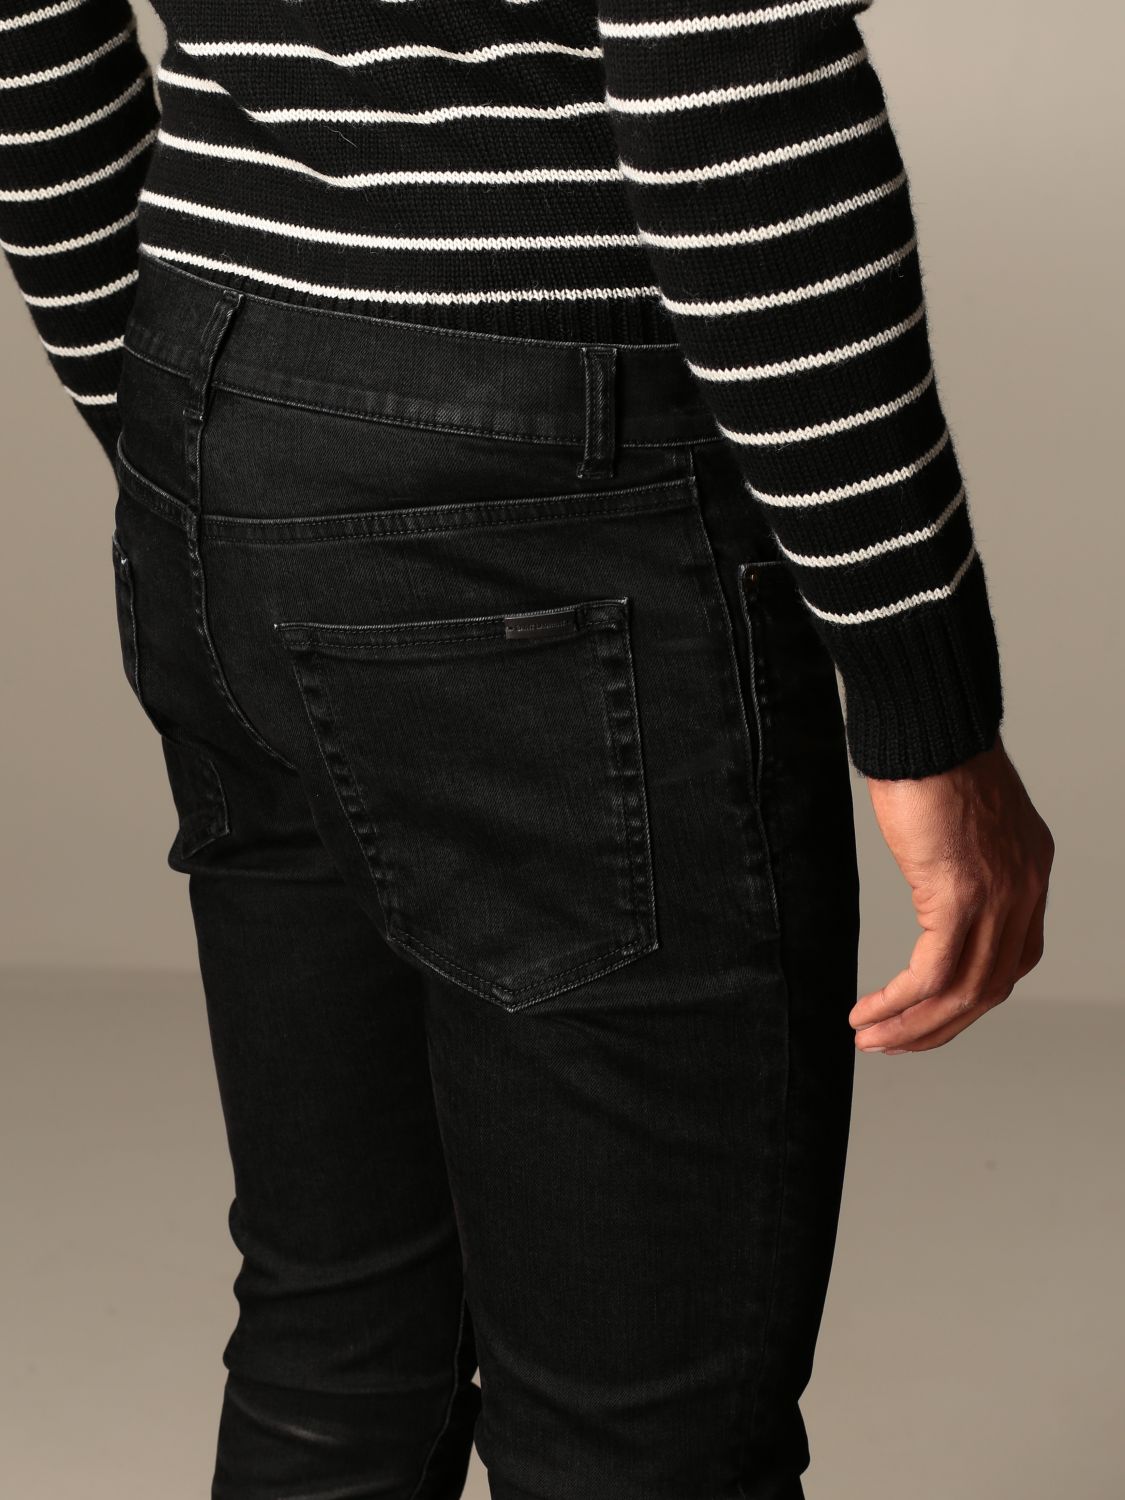 Saint Laurent Outlet: coated stretch skinny jeans - Black | Jeans Saint